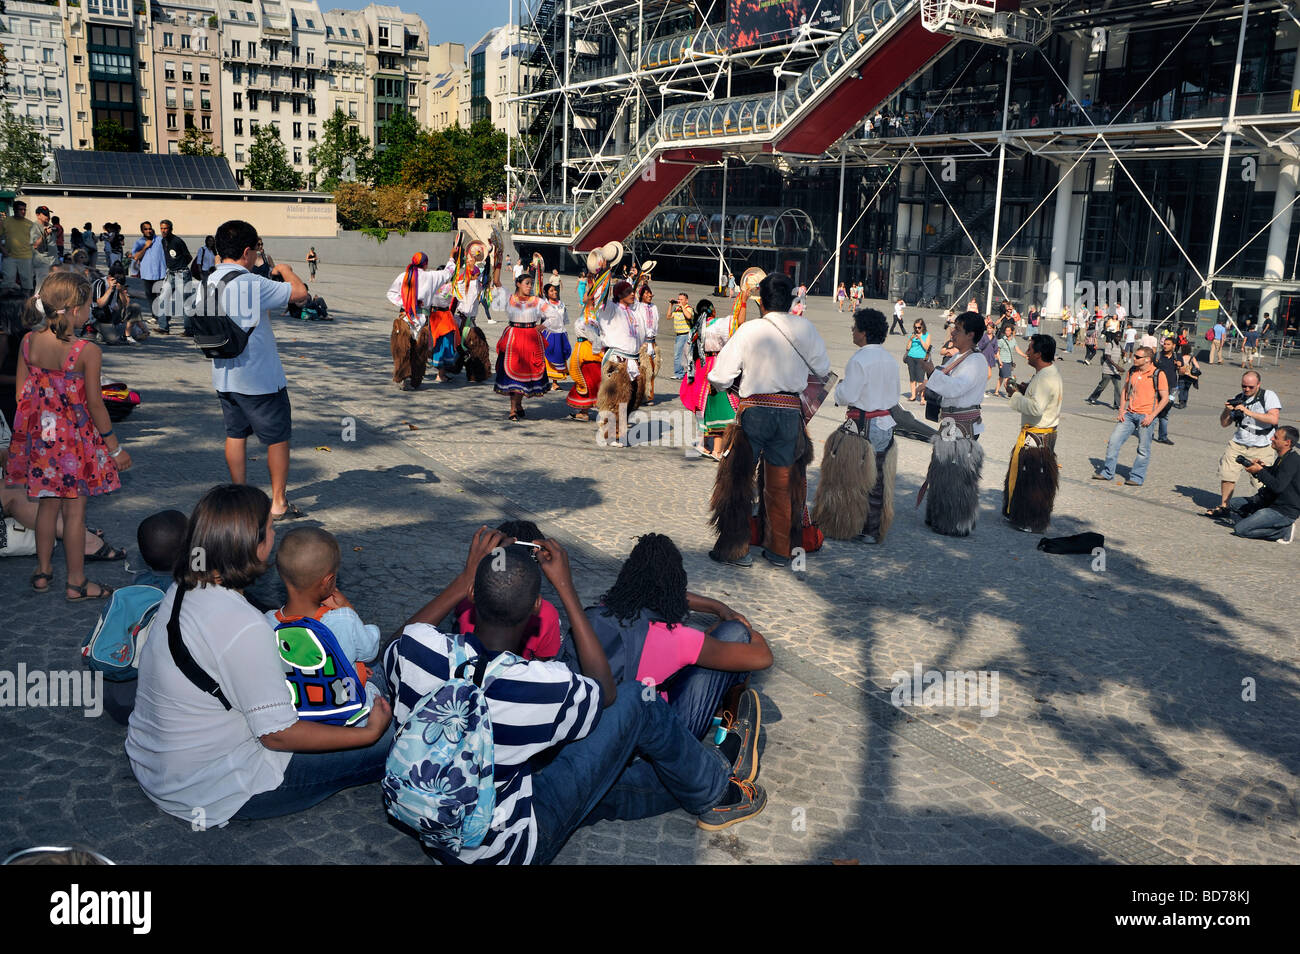 Paris France, Family Tourist Watching Group South American, Street interprètes, spectacle devant George Pompidou Museum Beaubourg, Front on Plaza, Banque D'Images